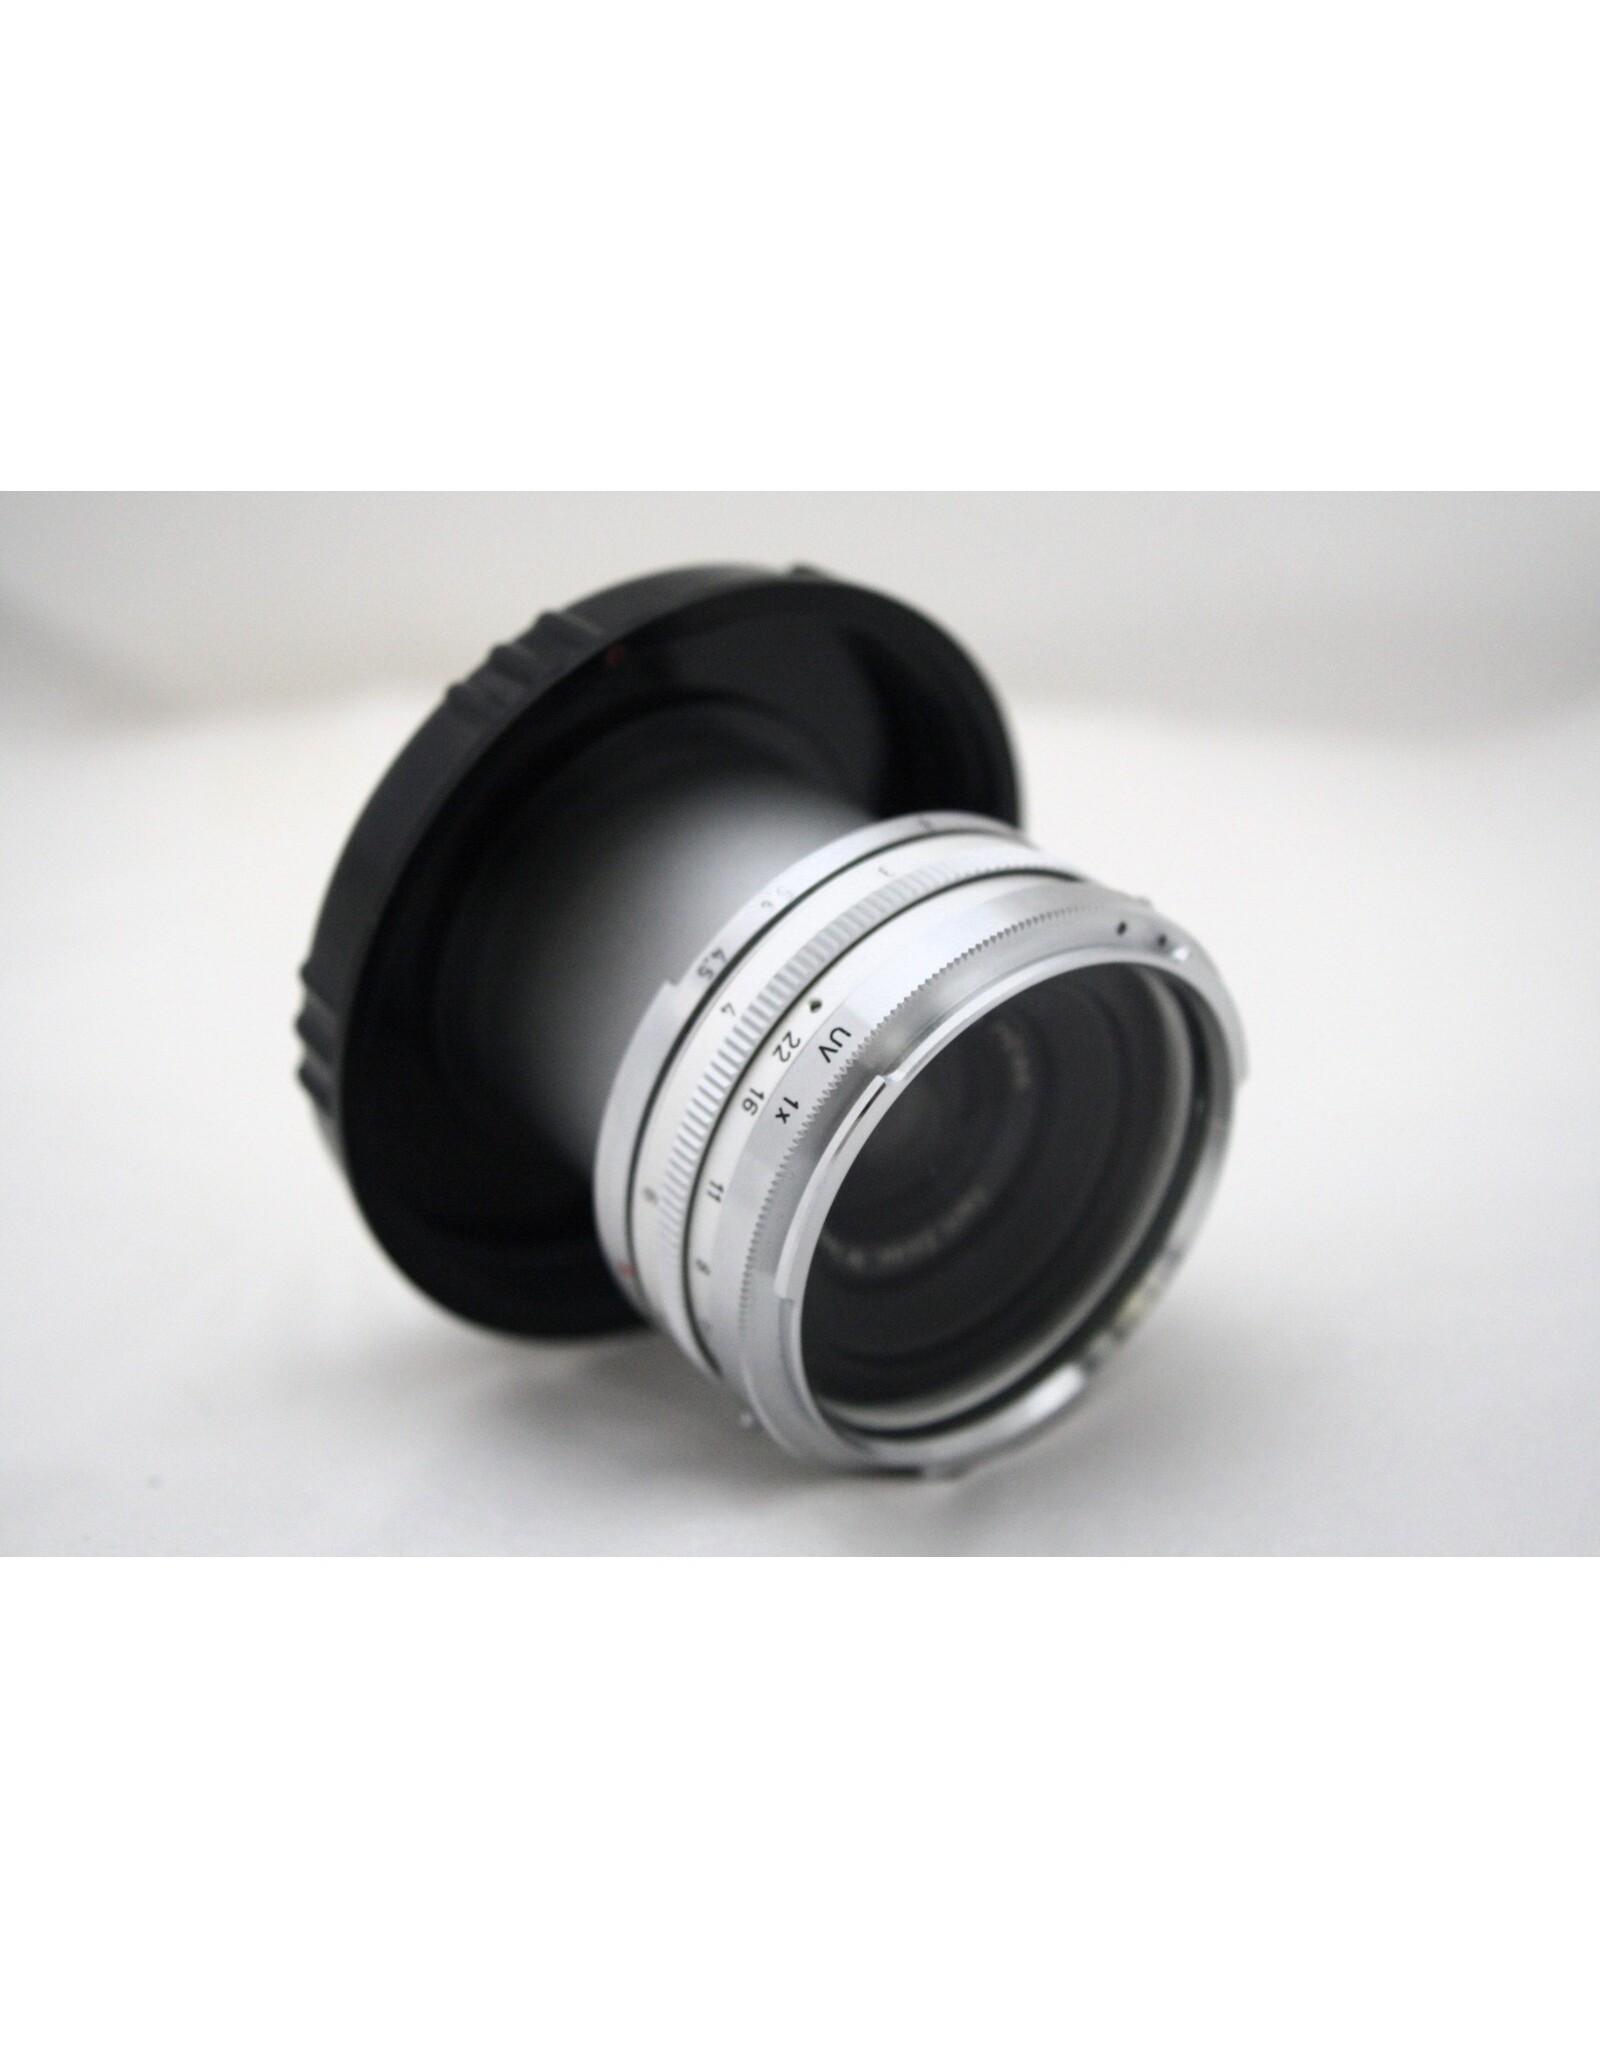 Carl Zeiss Carl Zeiss Biogon 21mm f4.5 Lens with original UV Filter S/N 3449033